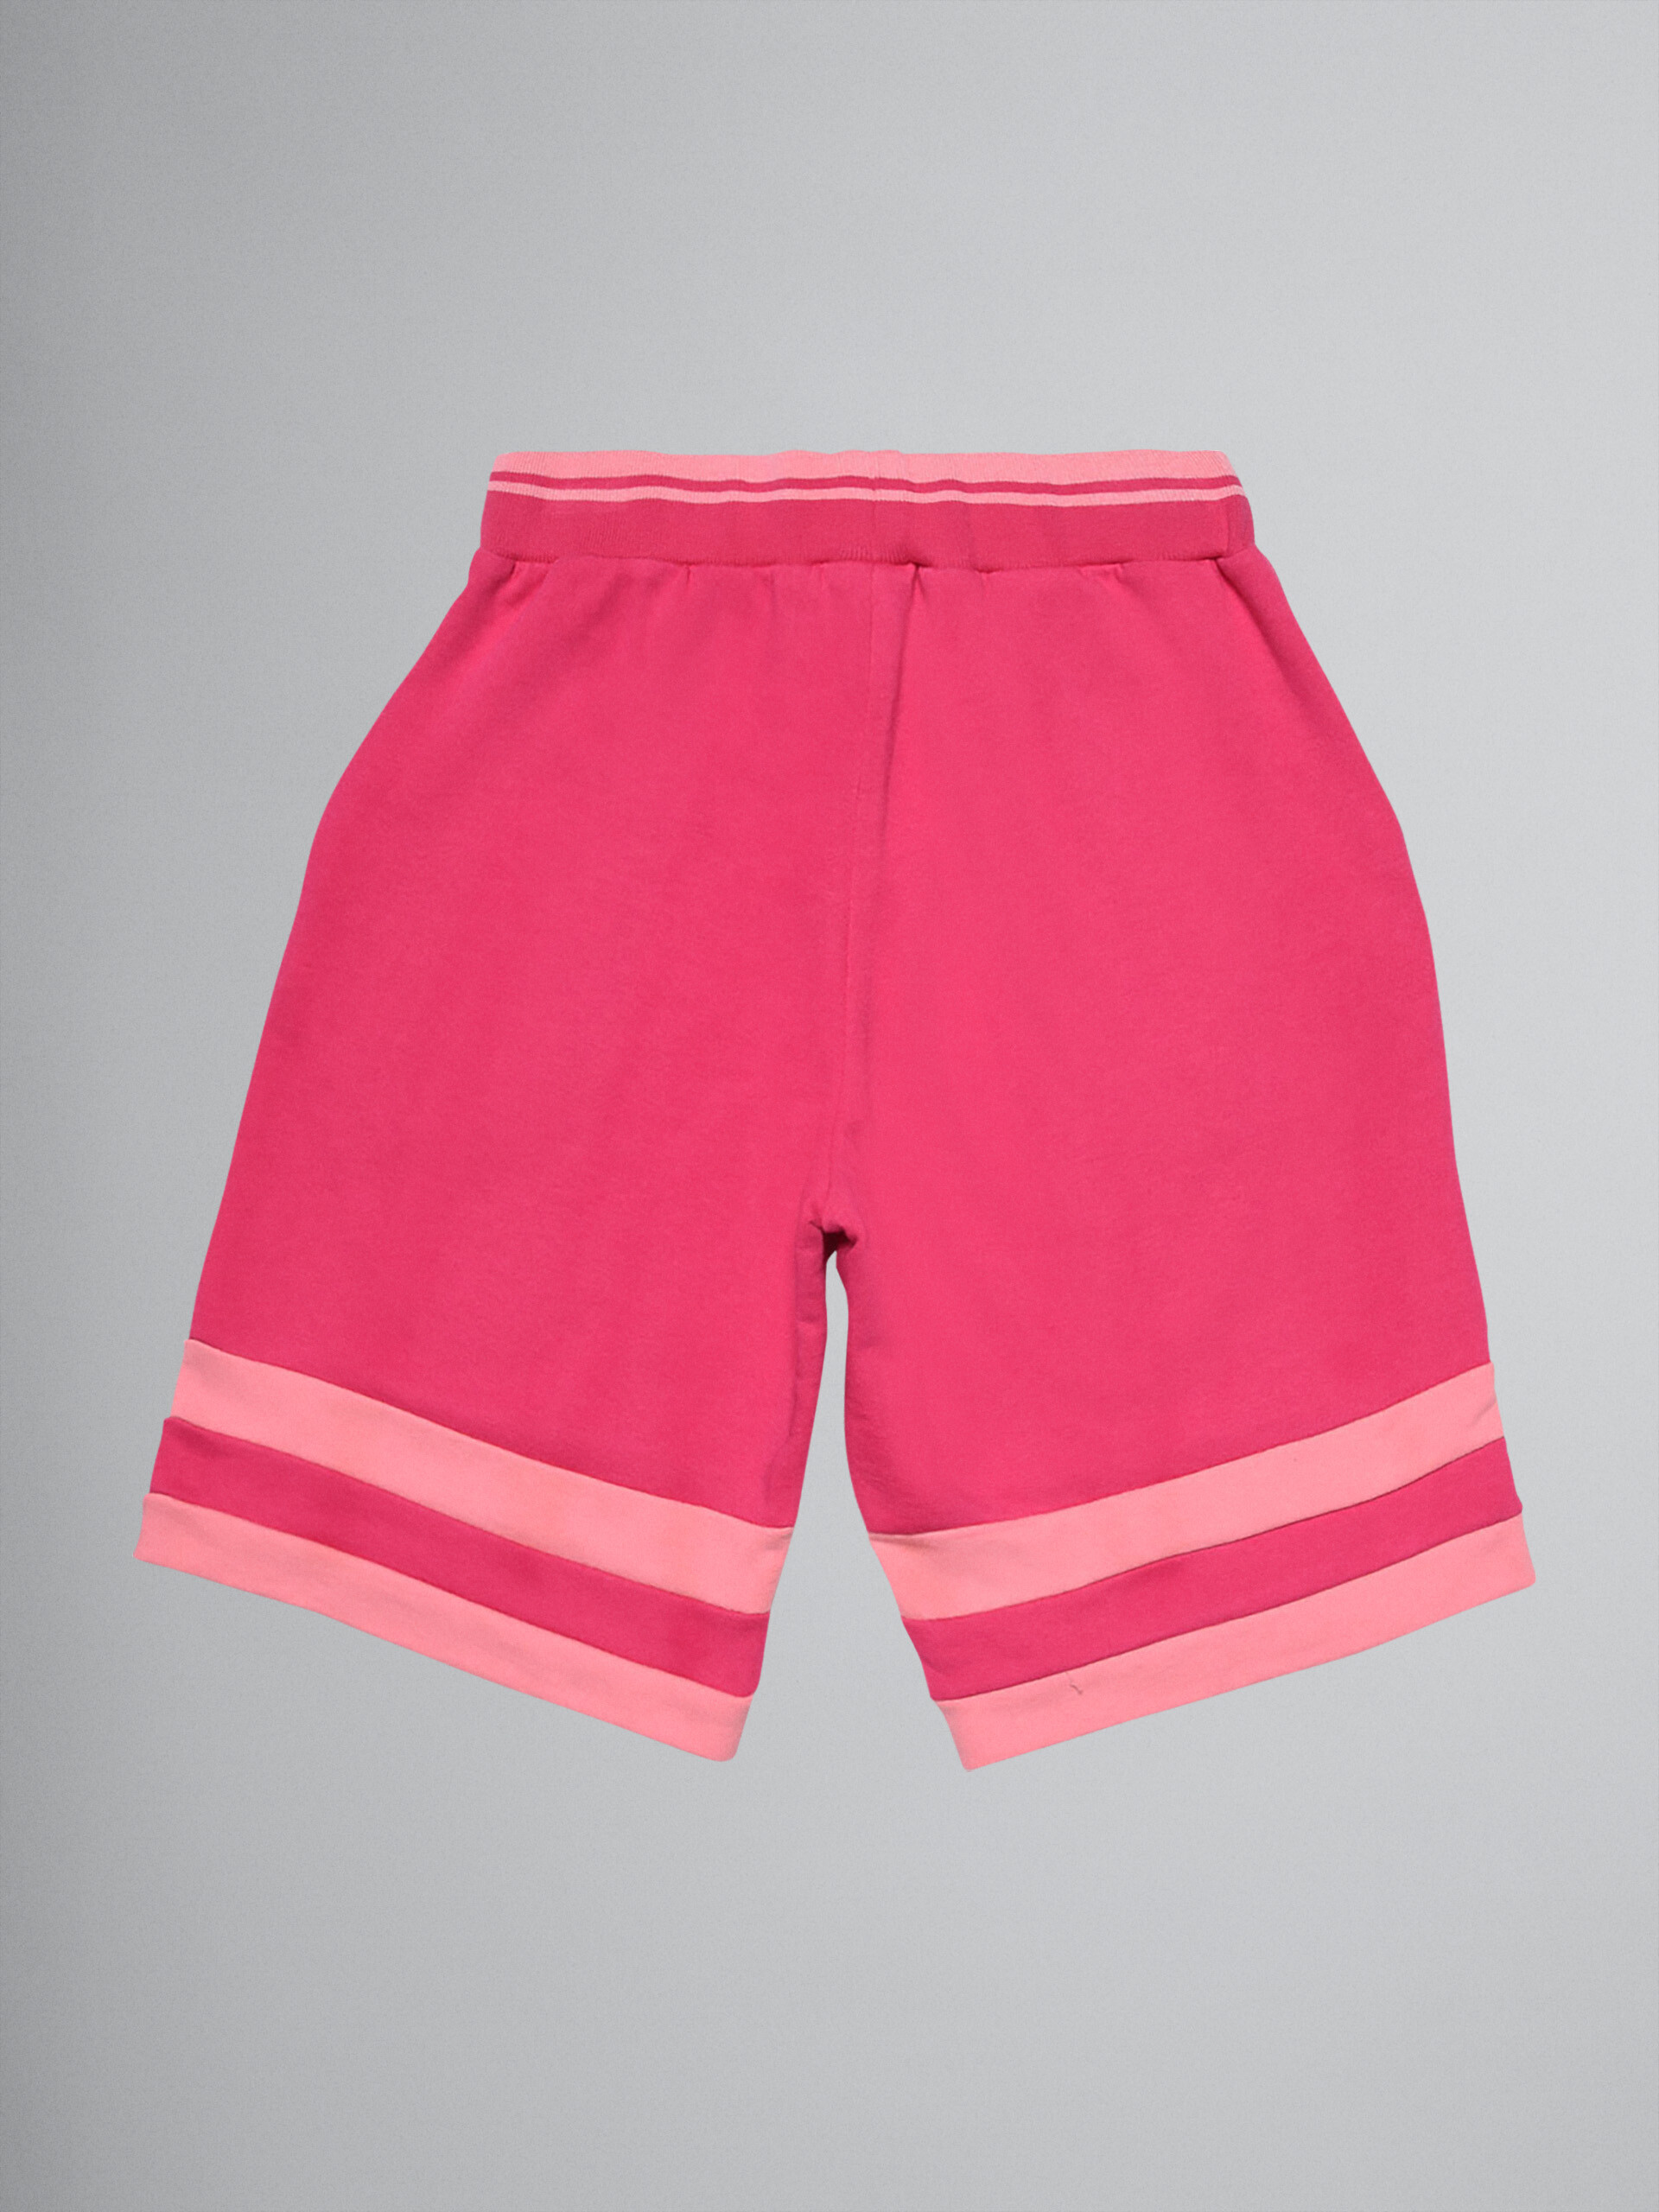 Pantaloni corti in felpa di cotone rosa colorblock - Pantaloni - Image 2